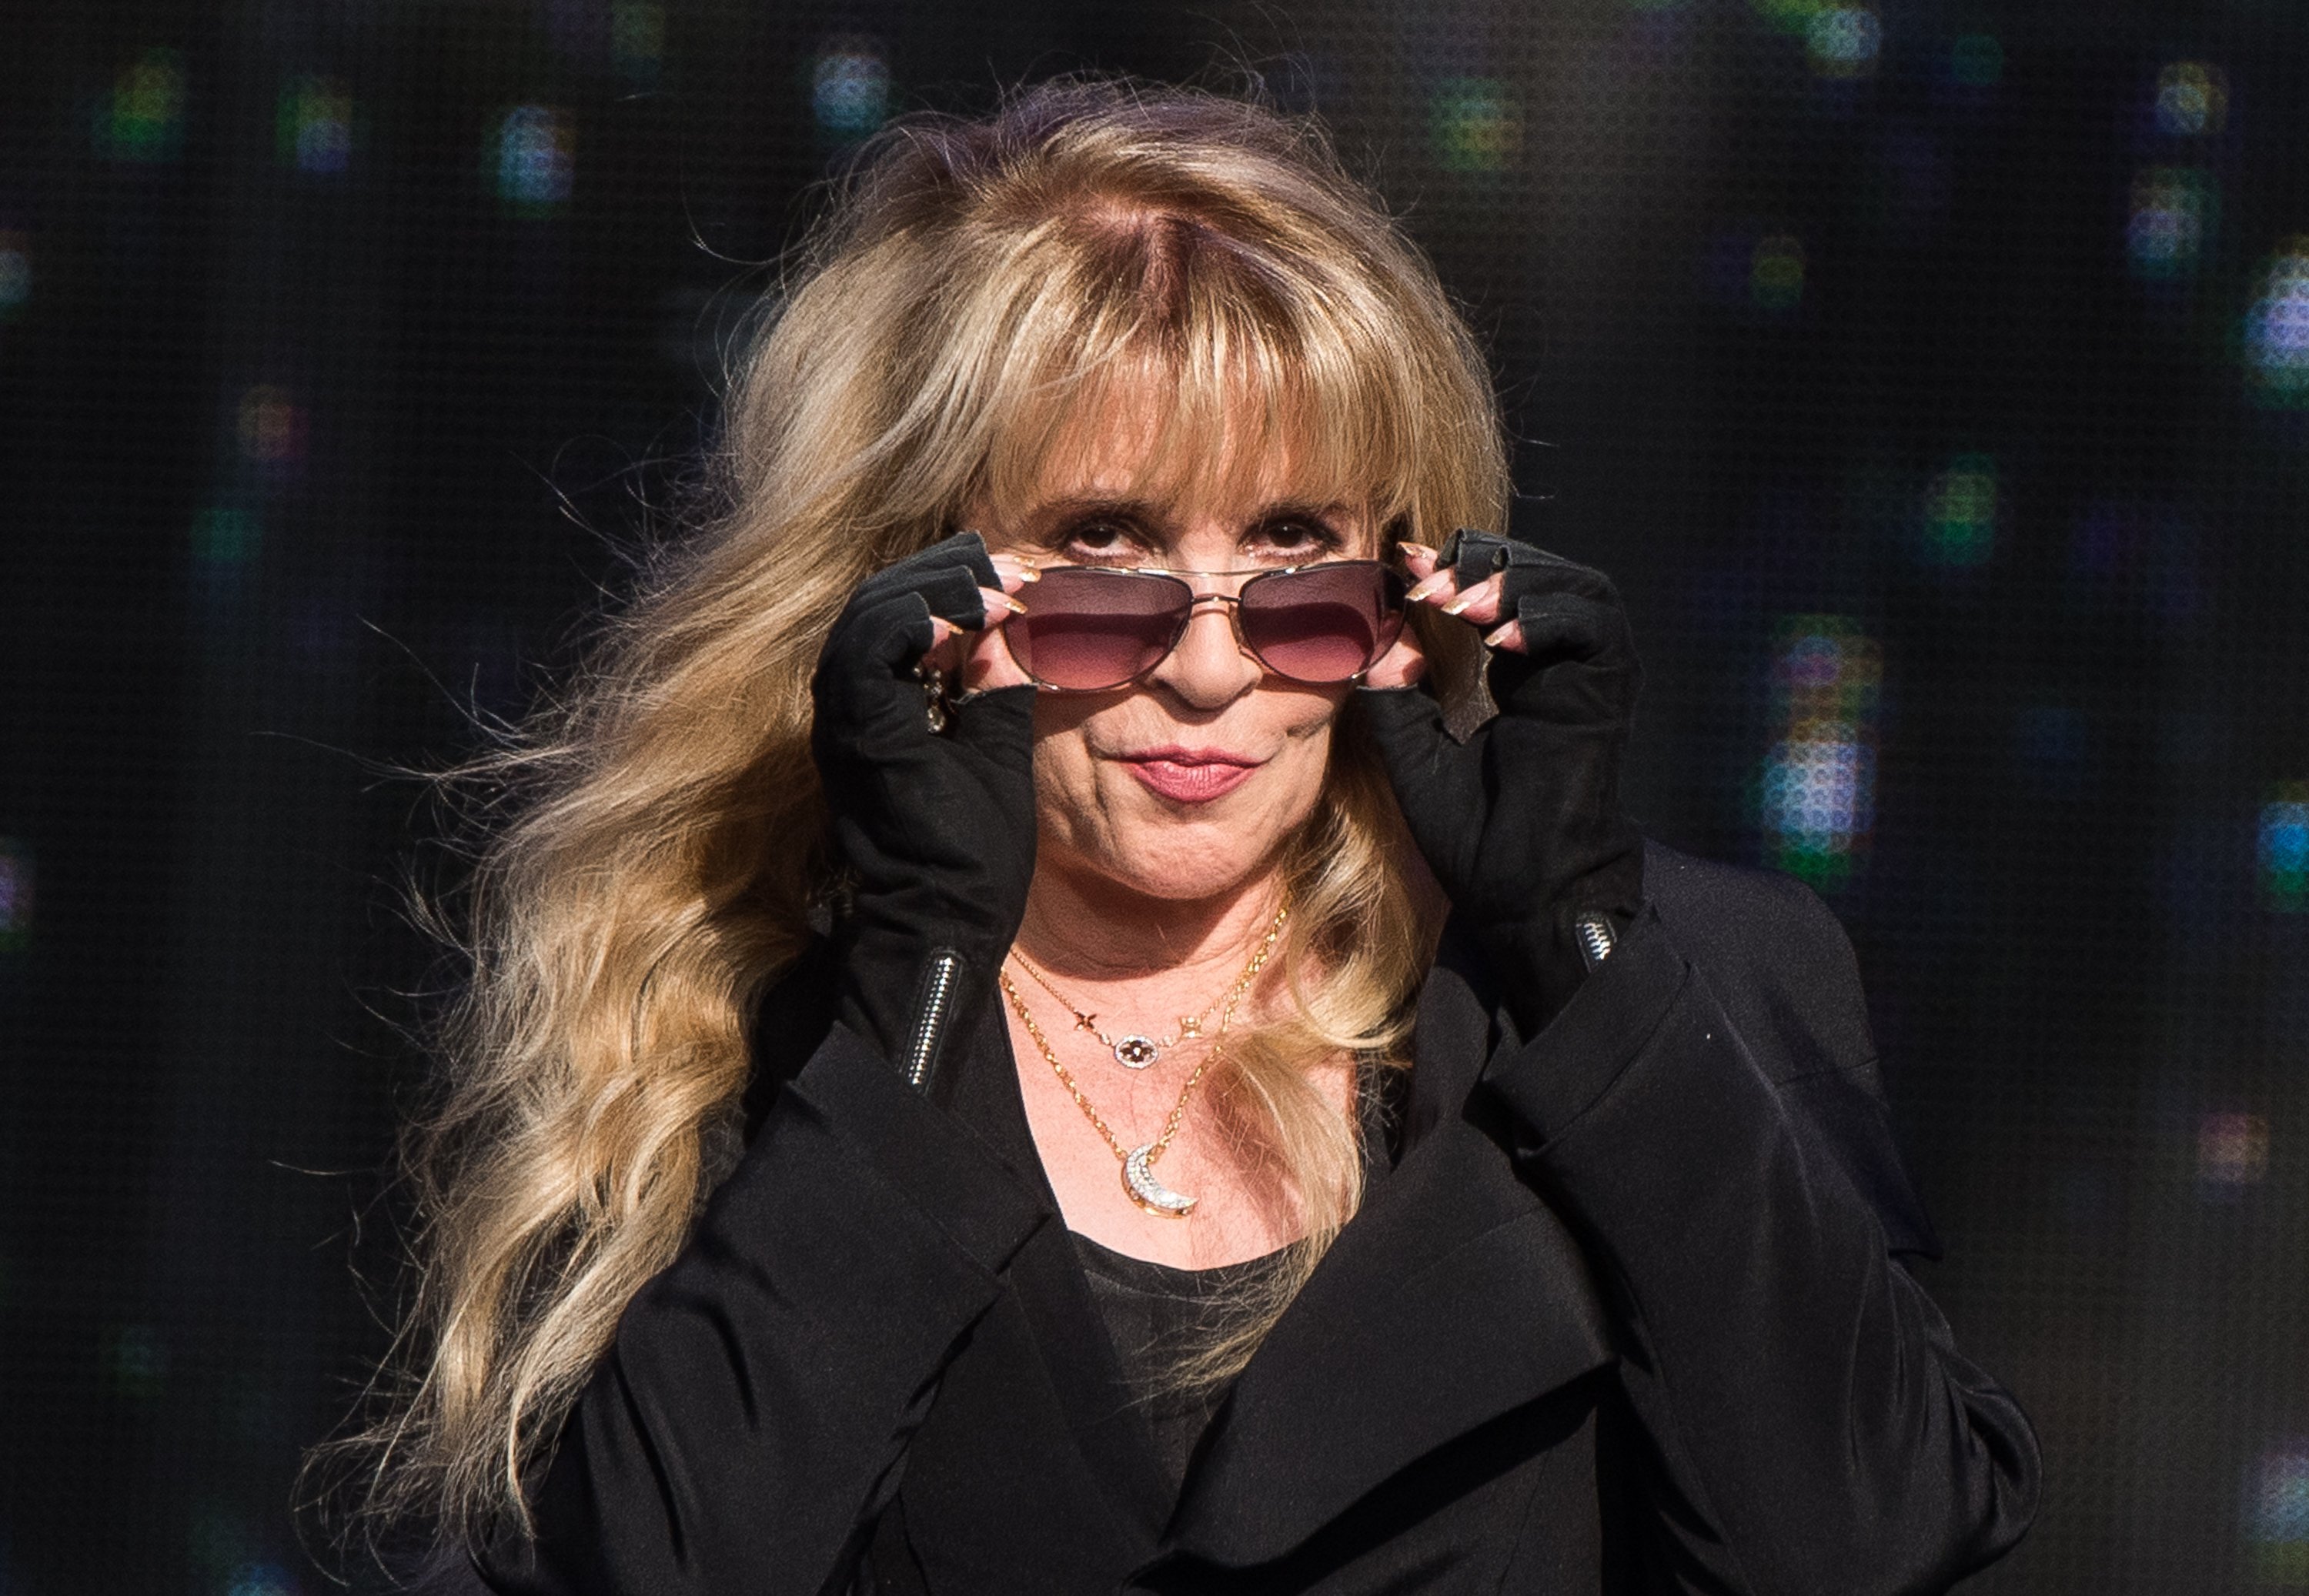 Stevie Nicks wears a black jacket, black gloves, and sunglasses.